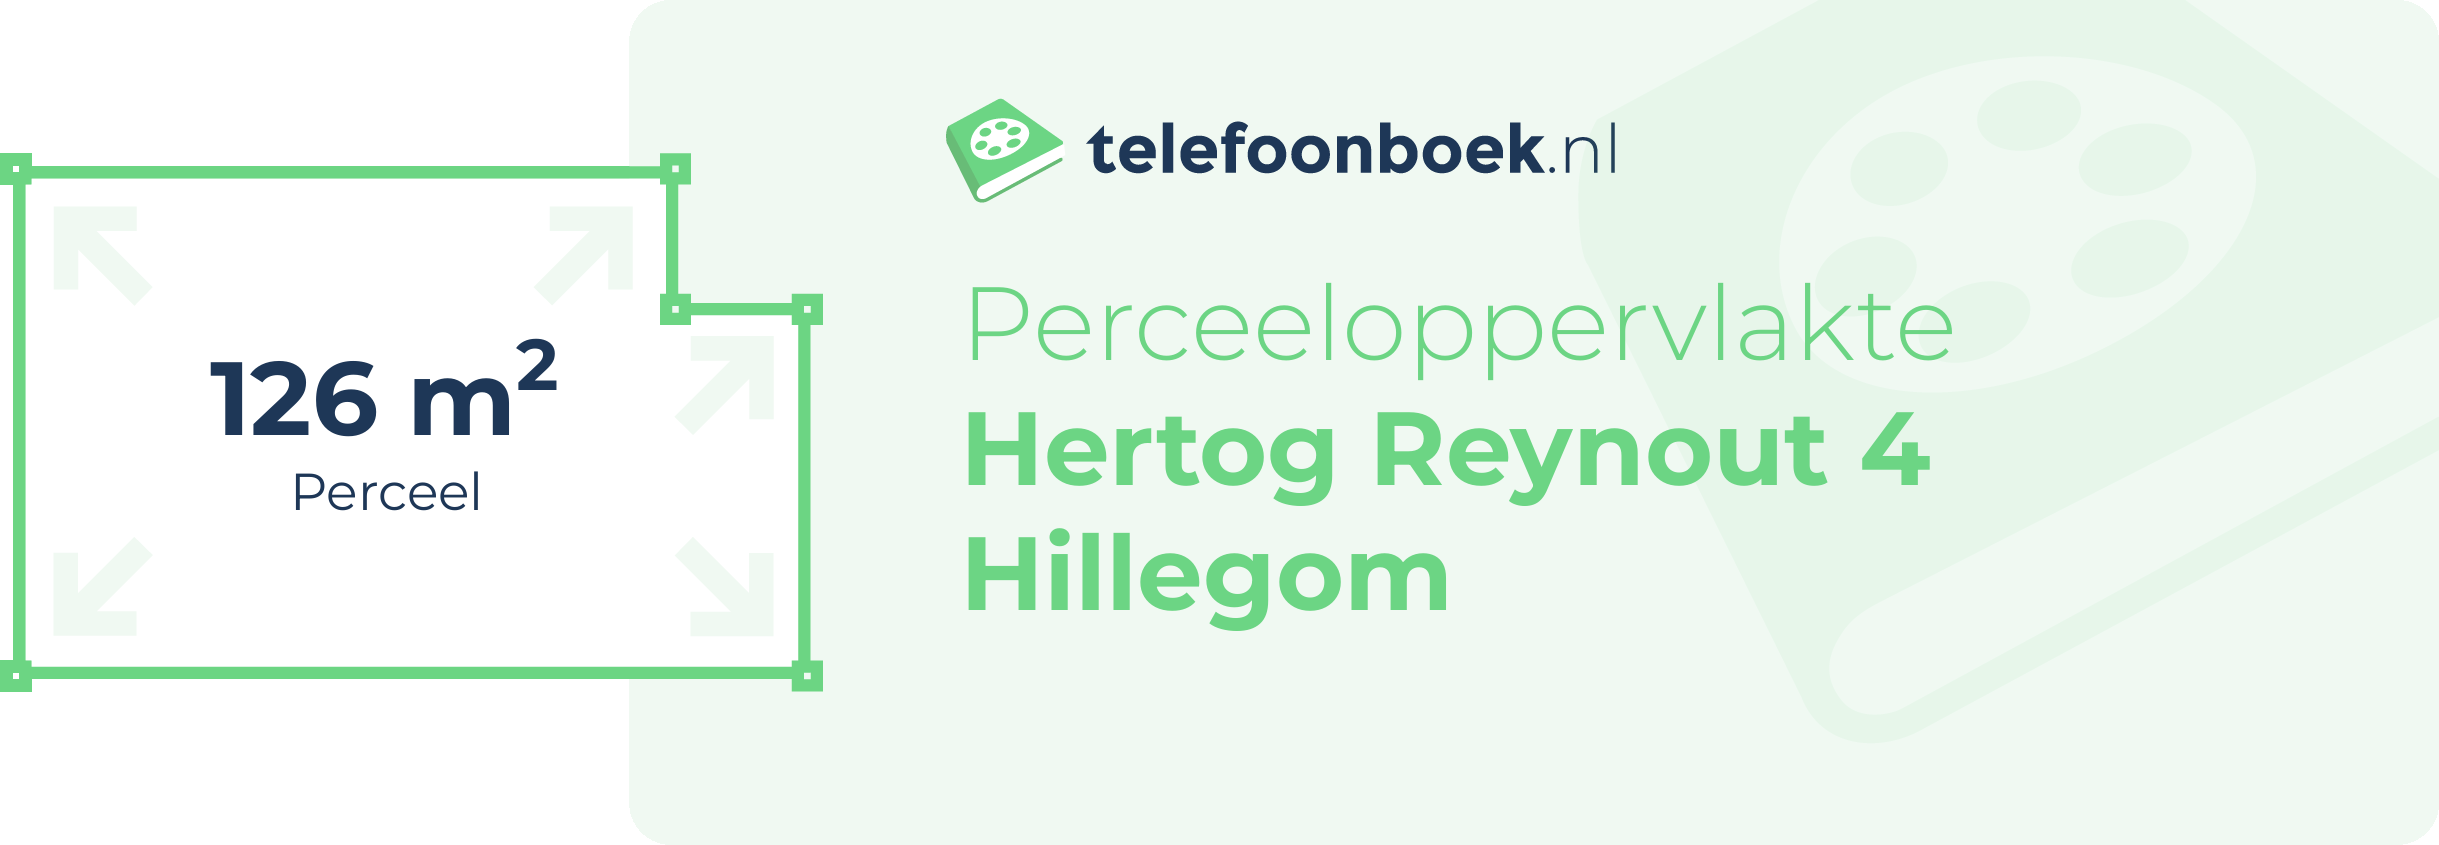 Perceeloppervlakte Hertog Reynout 4 Hillegom